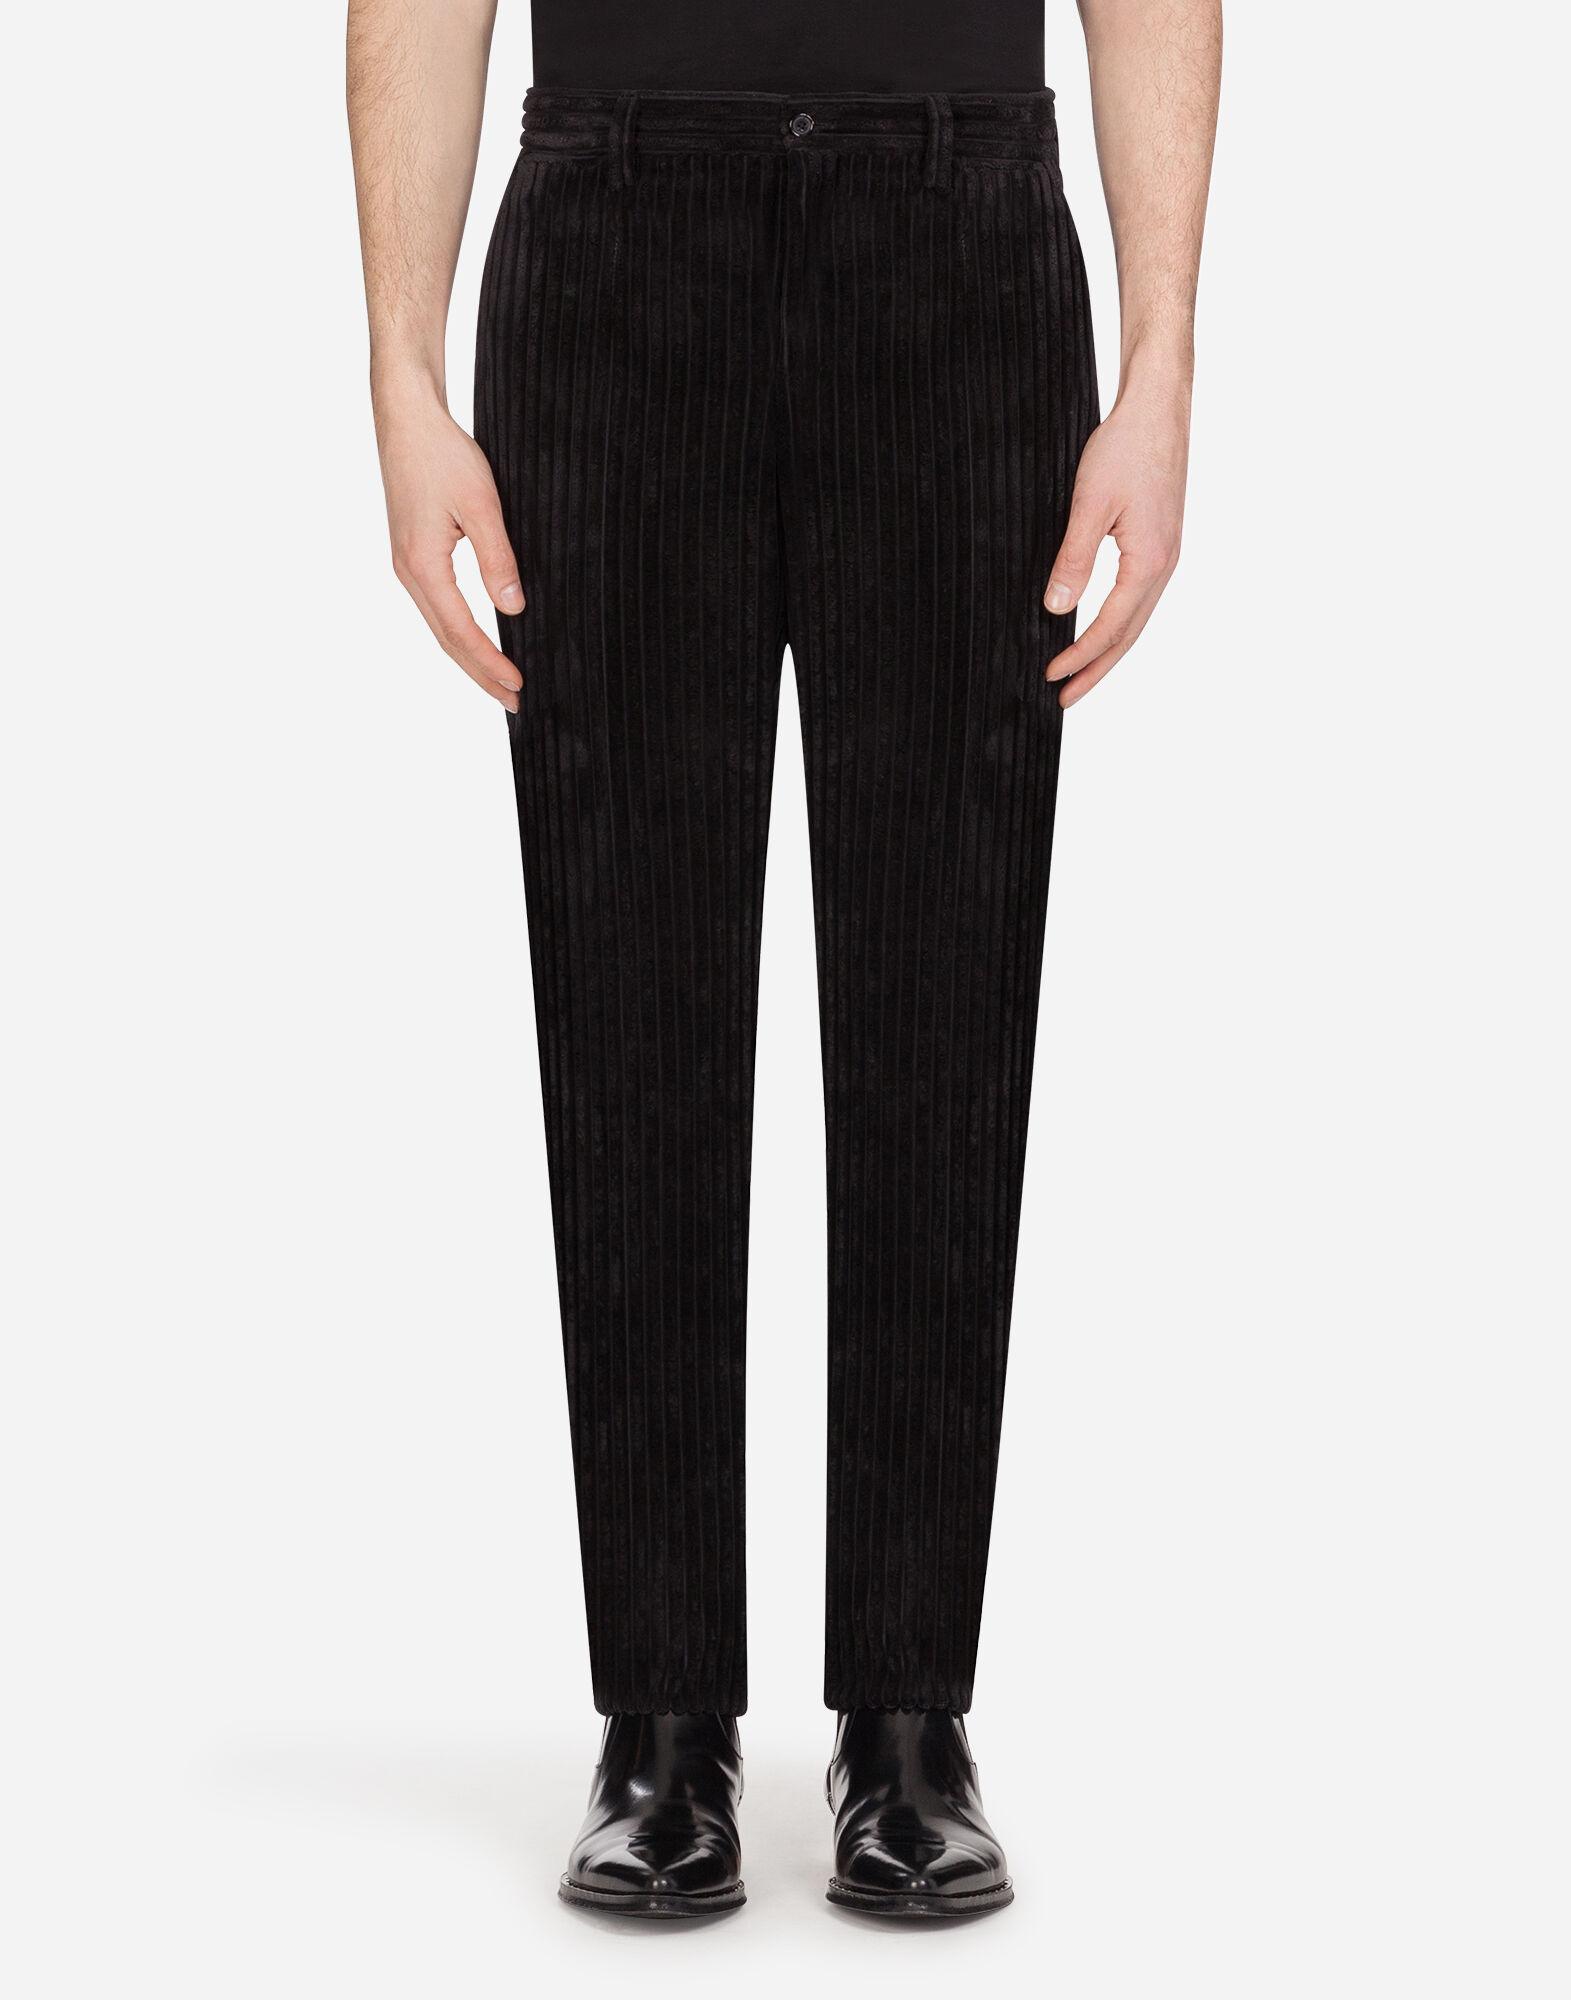 Dolce & Gabbana Corduroy Pants in Black for Men - Lyst